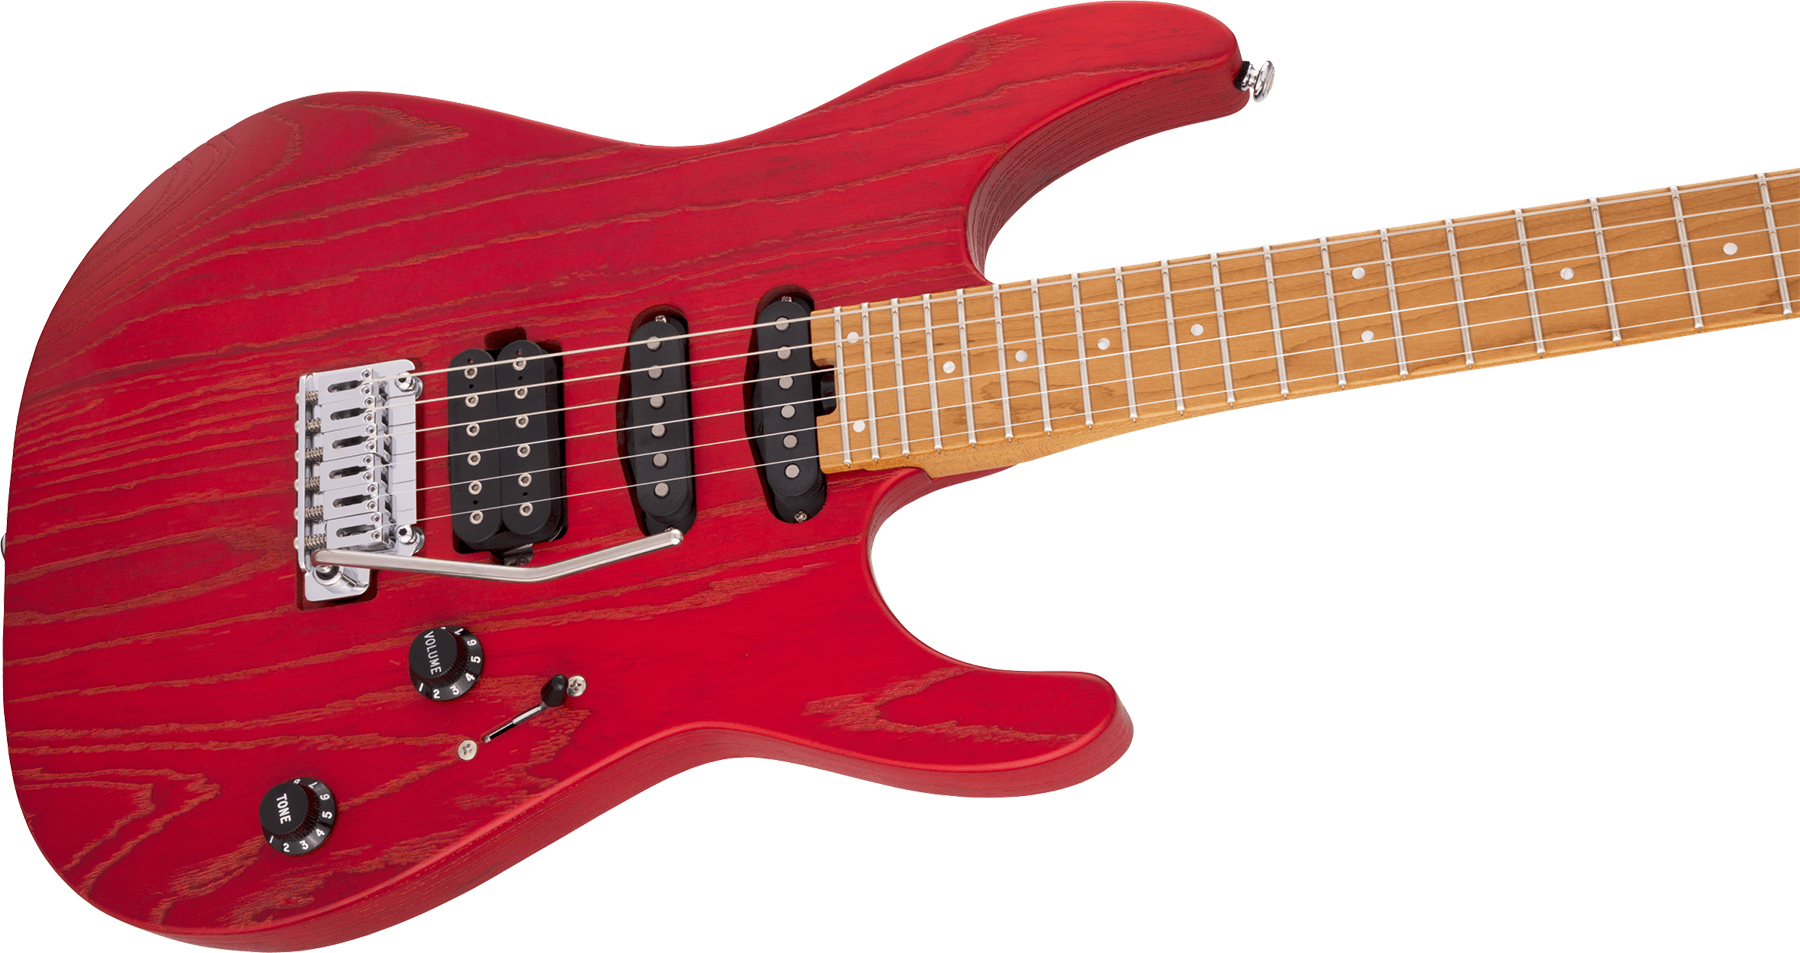 Charvel Dinky Dk24 Hss 2pt Cm Ash Pro-mod Seymour Duncan Trem Mn - Red Ash - Guitarra eléctrica con forma de str. - Variation 2